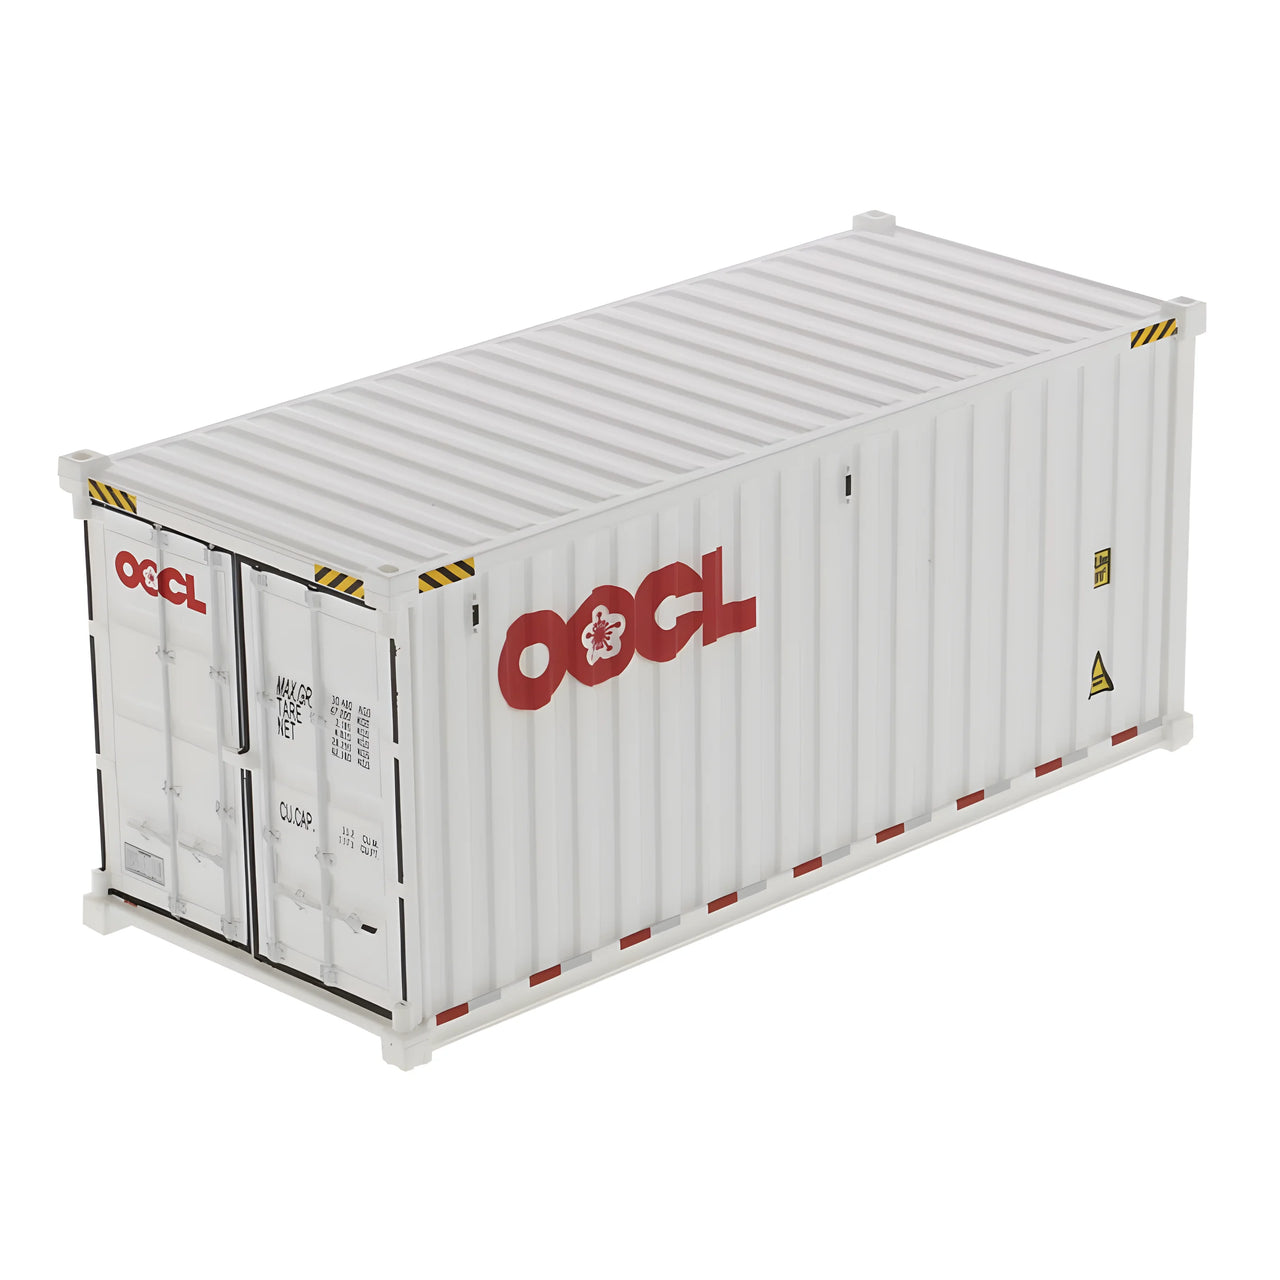 91025B 20' Dry Goods Sea Container Escala 1:50